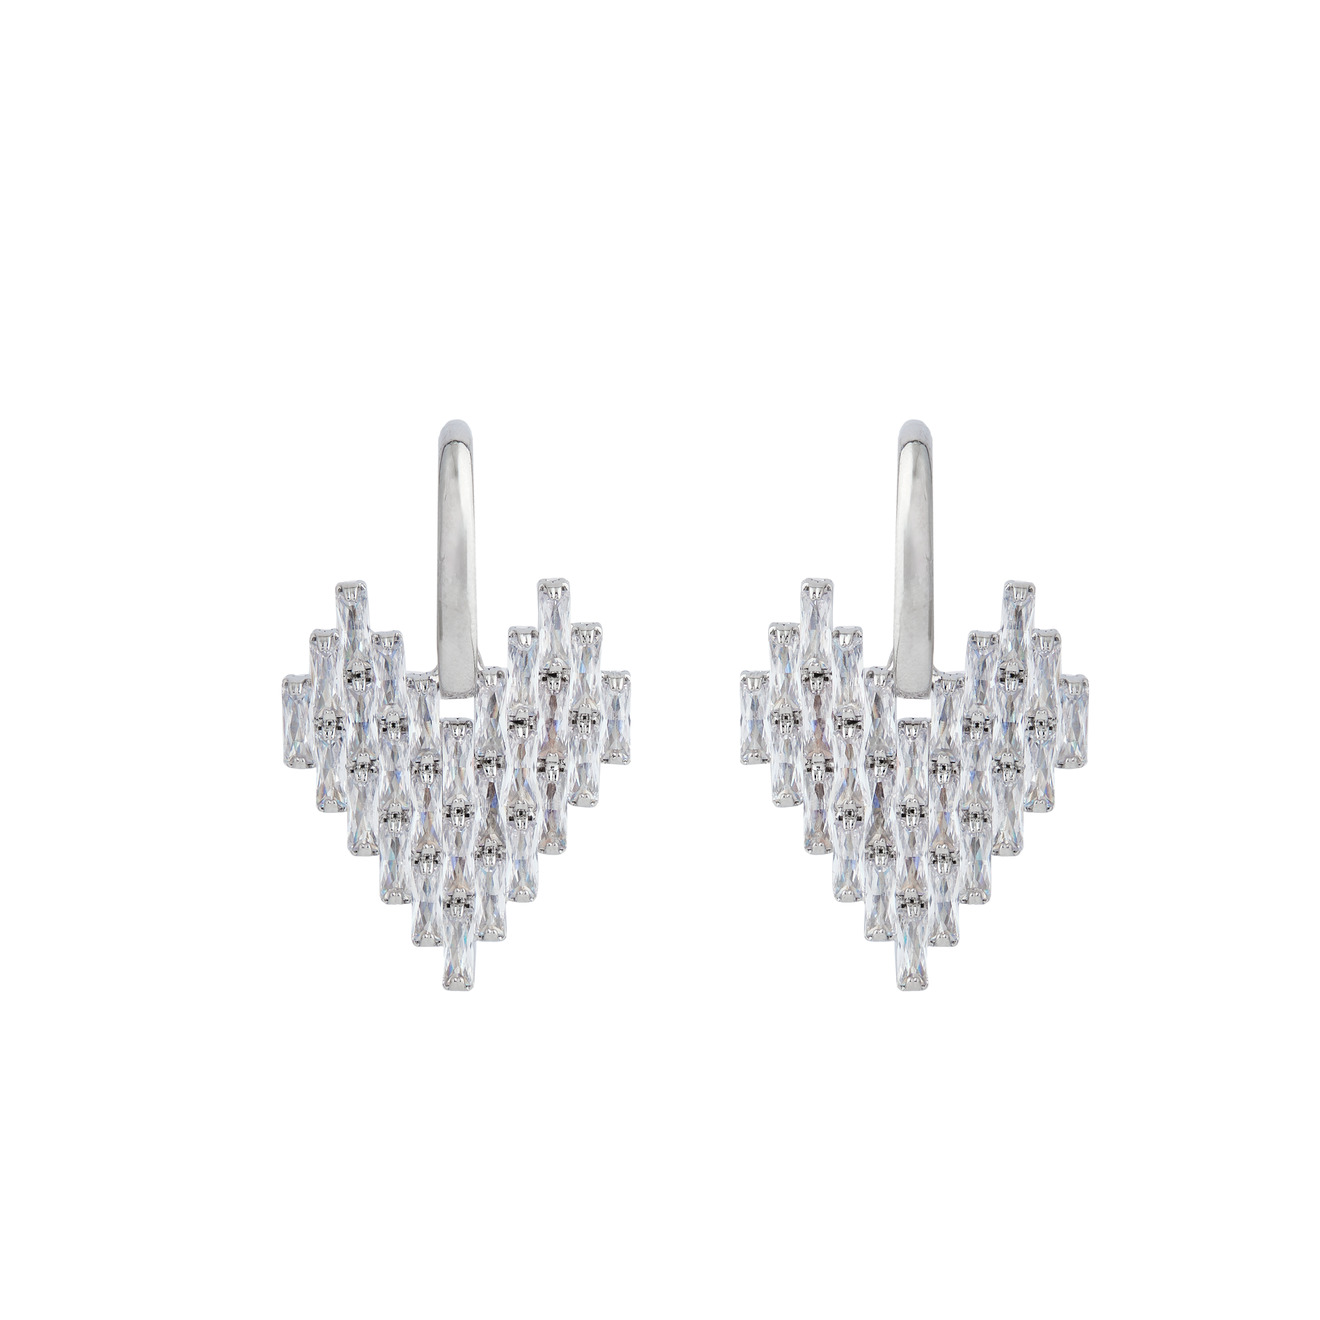 Herald Percy Серебристые серьги-сердца с багетами кристаллов herald percy серебристые серьги сердца с паве из кристаллов